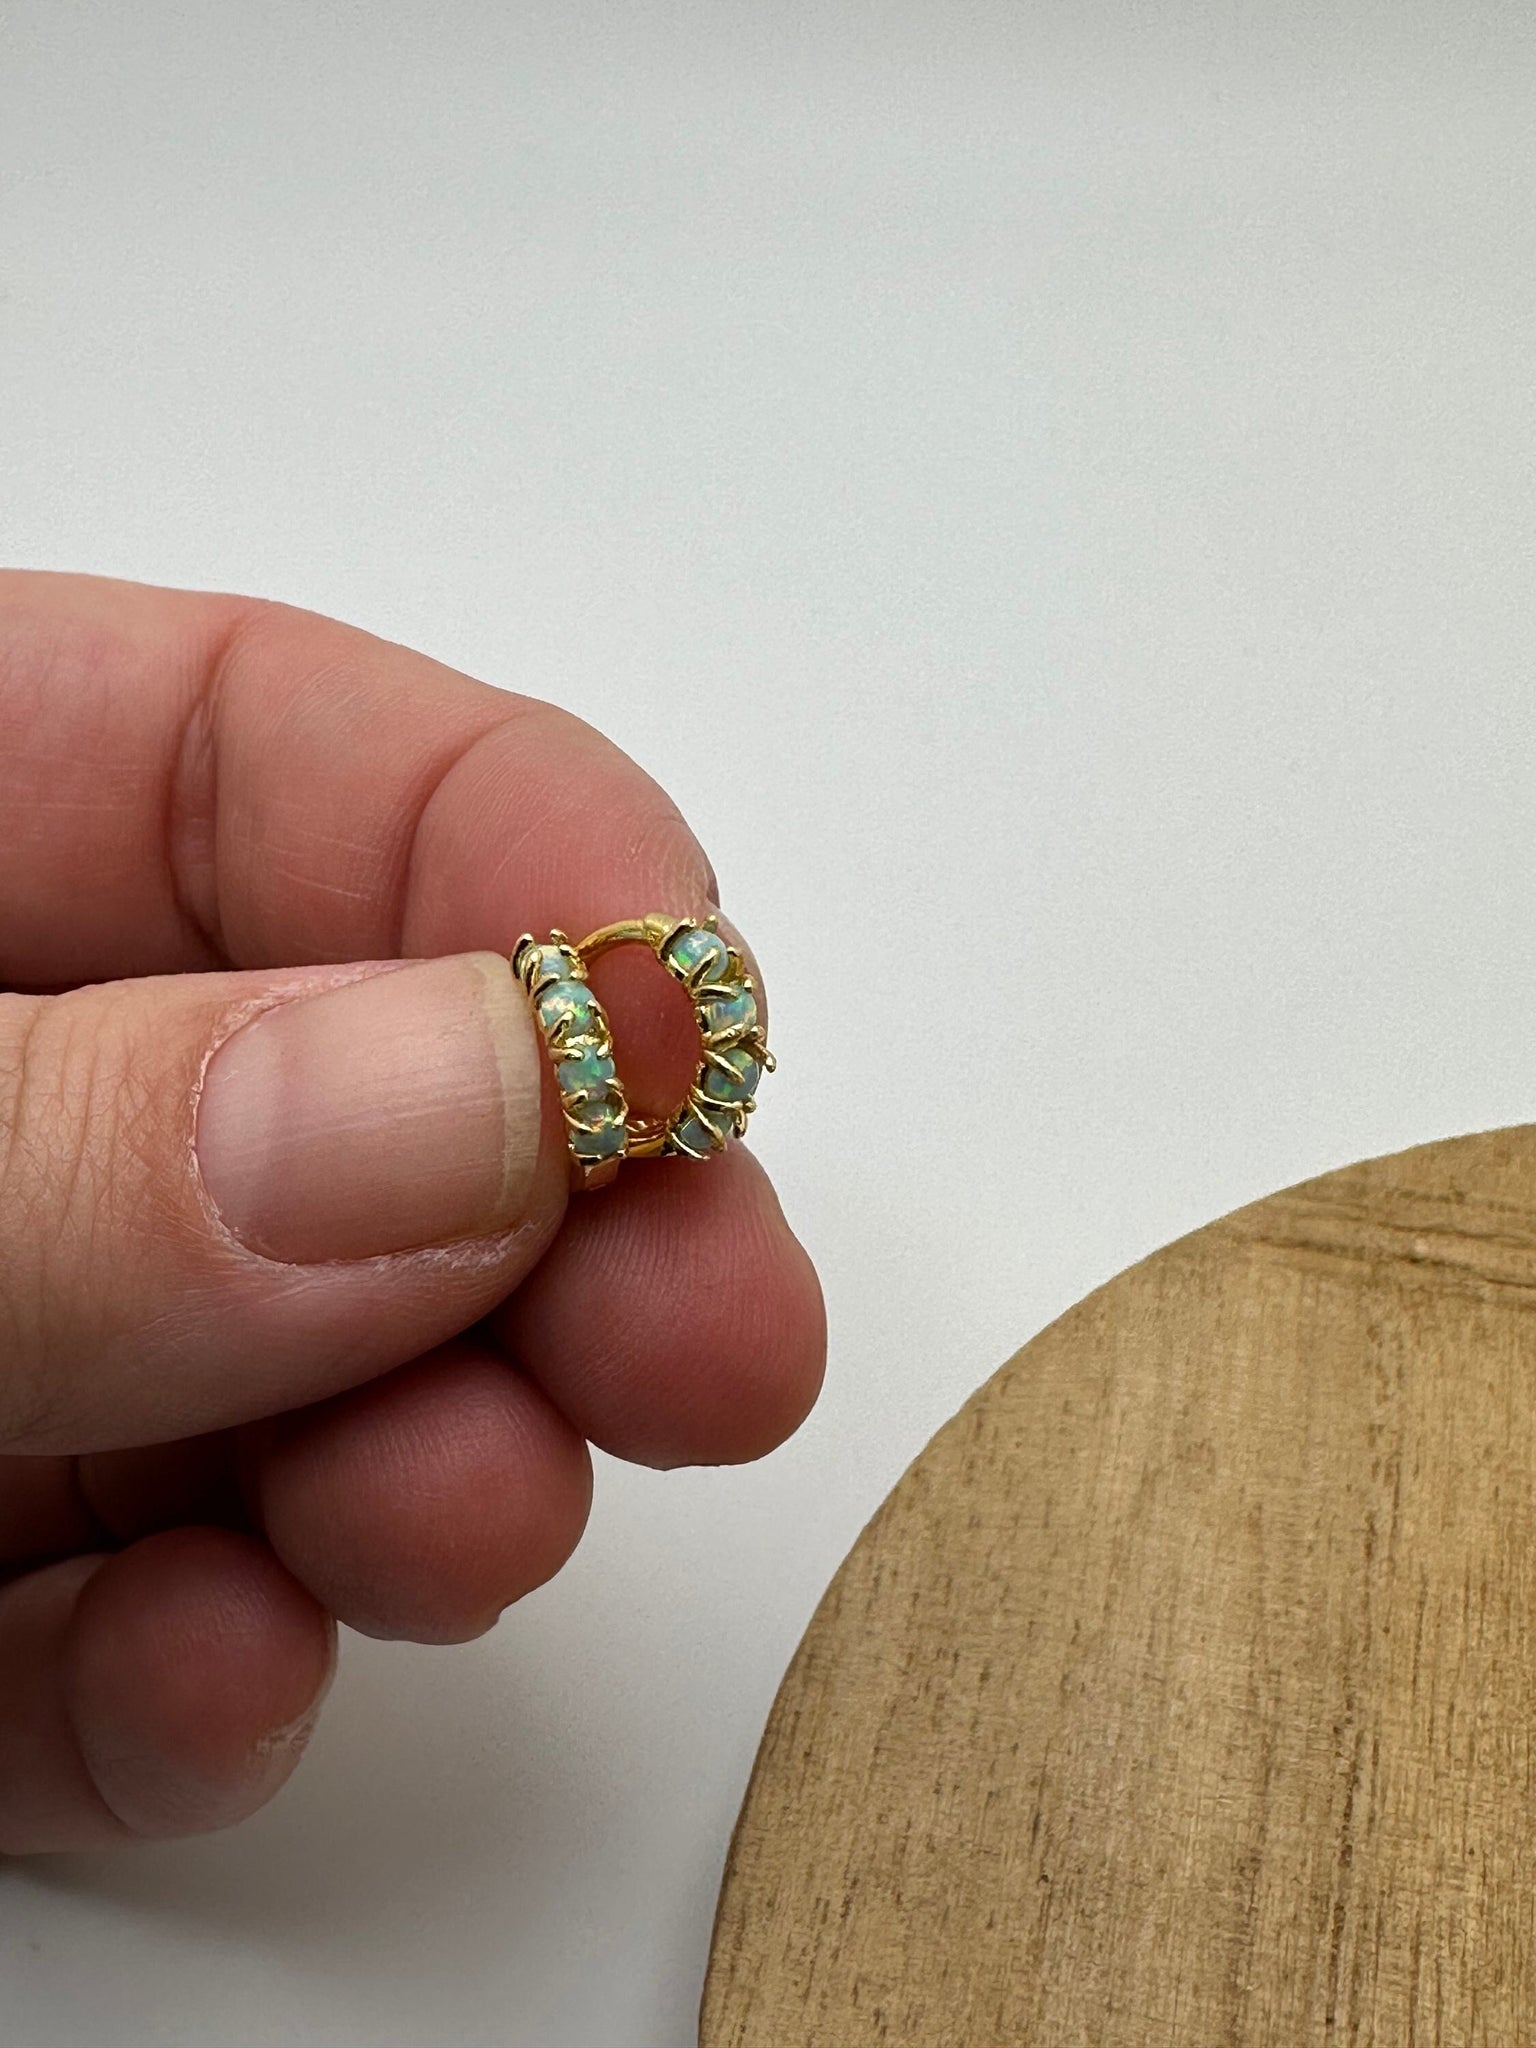 mint green opal huggie earrings, gold earrings, bridesmaid earring, gift for her, hypoallergenic, gift for her, holiday, mint green opal